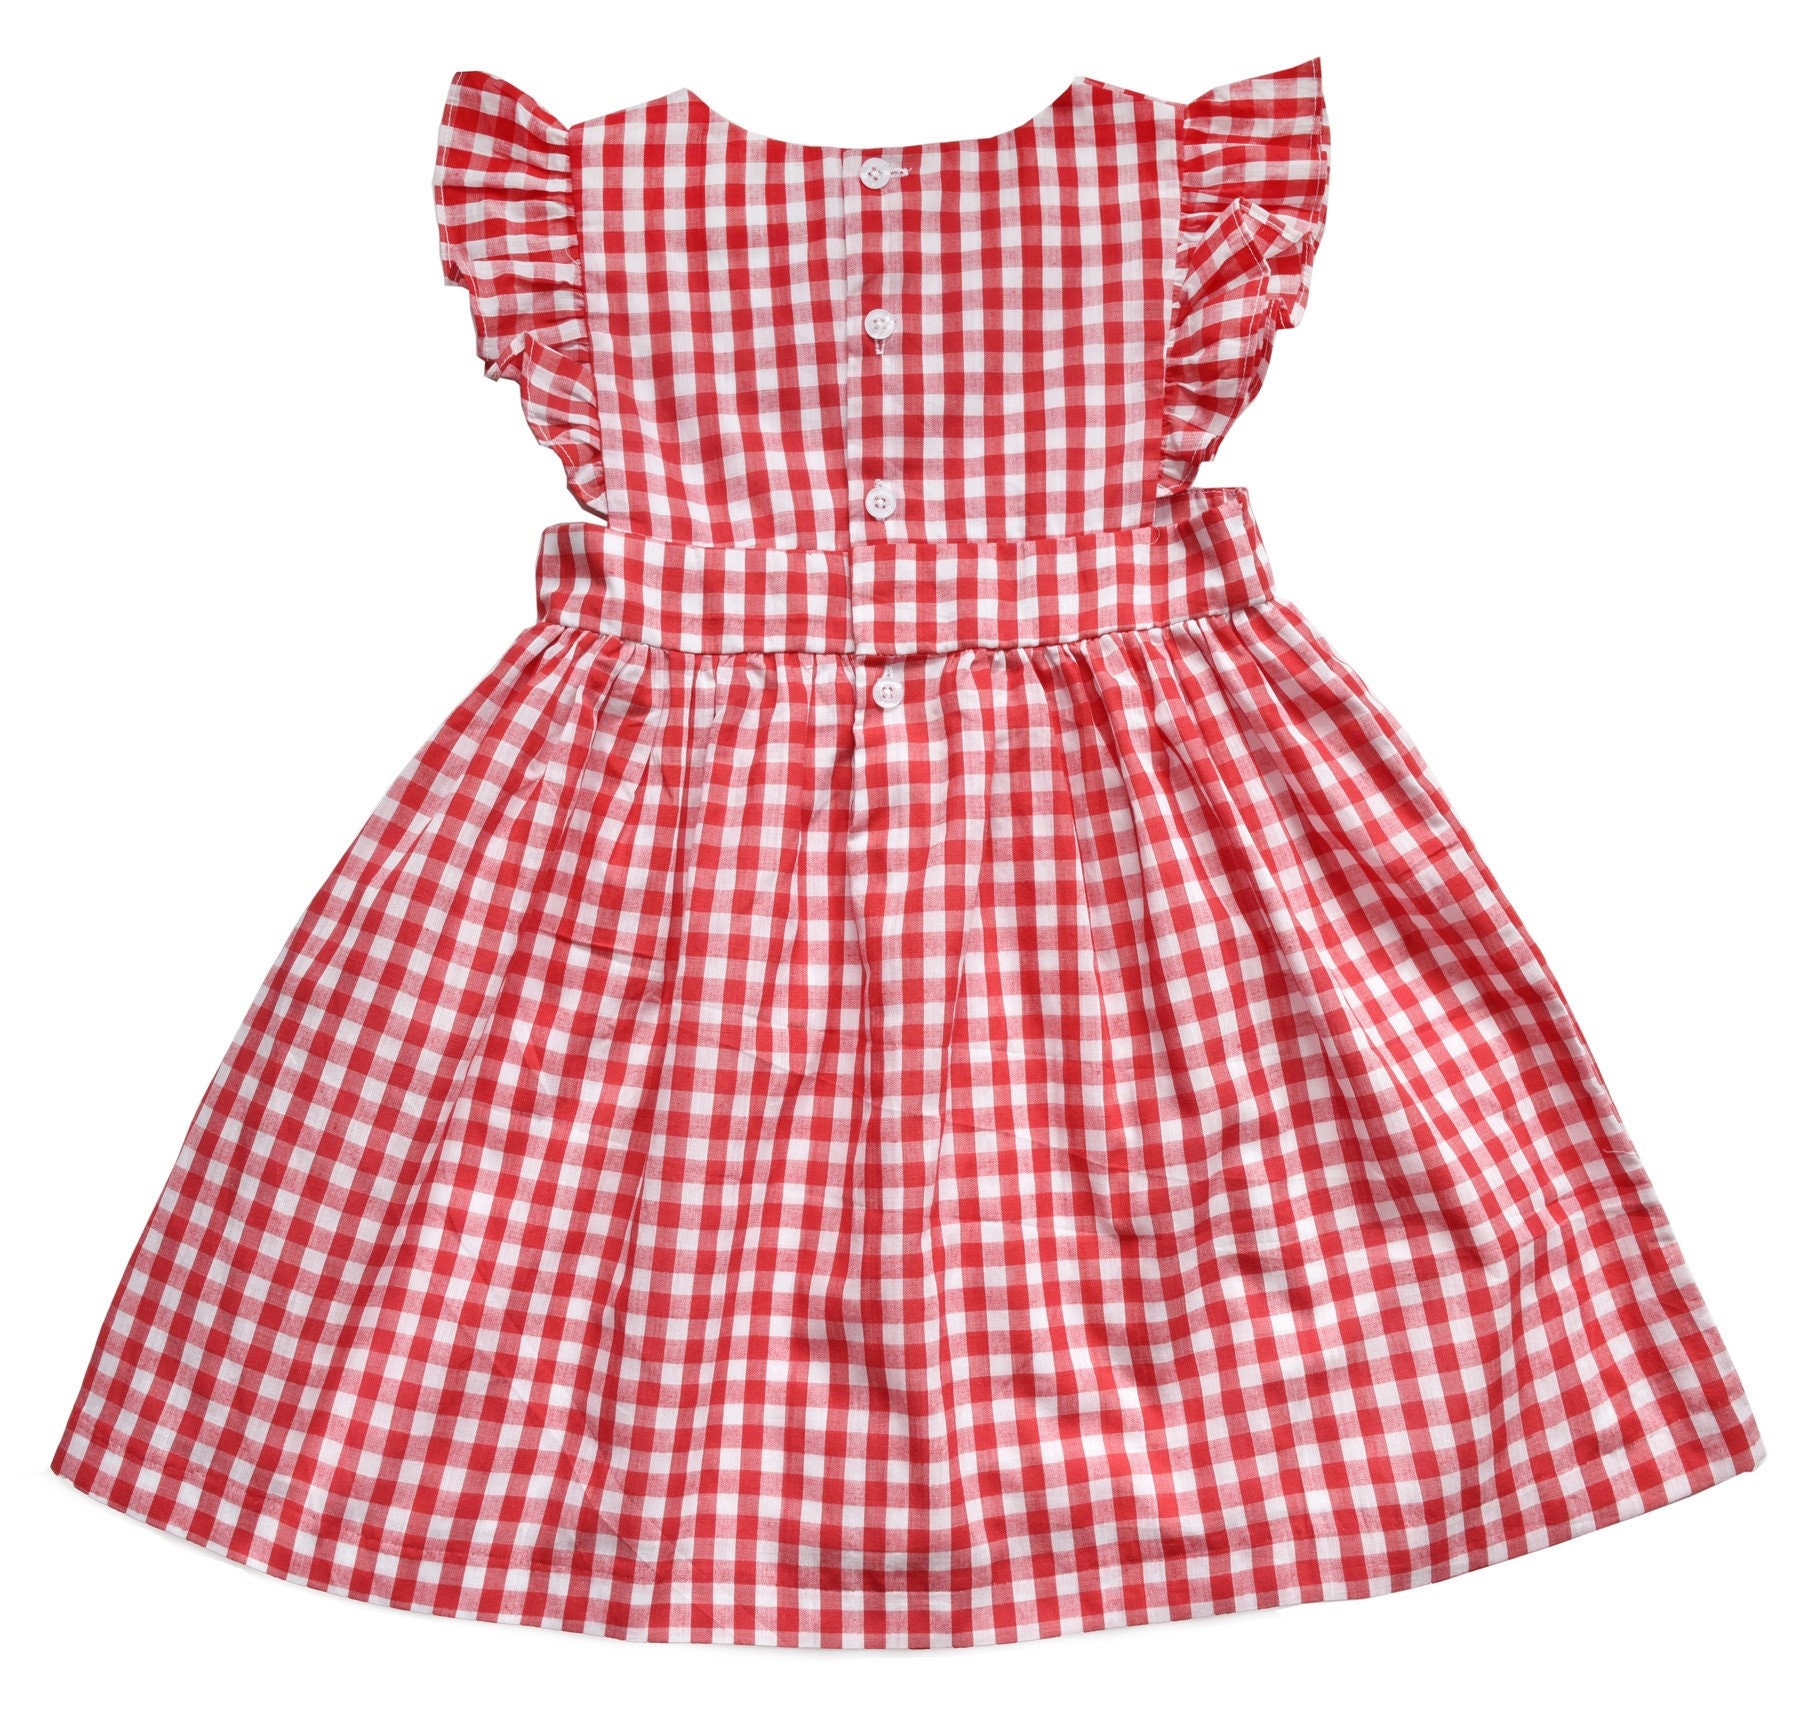 Patriotic Girls Dress Red & White Check Dress Toddler Dress - Etsy